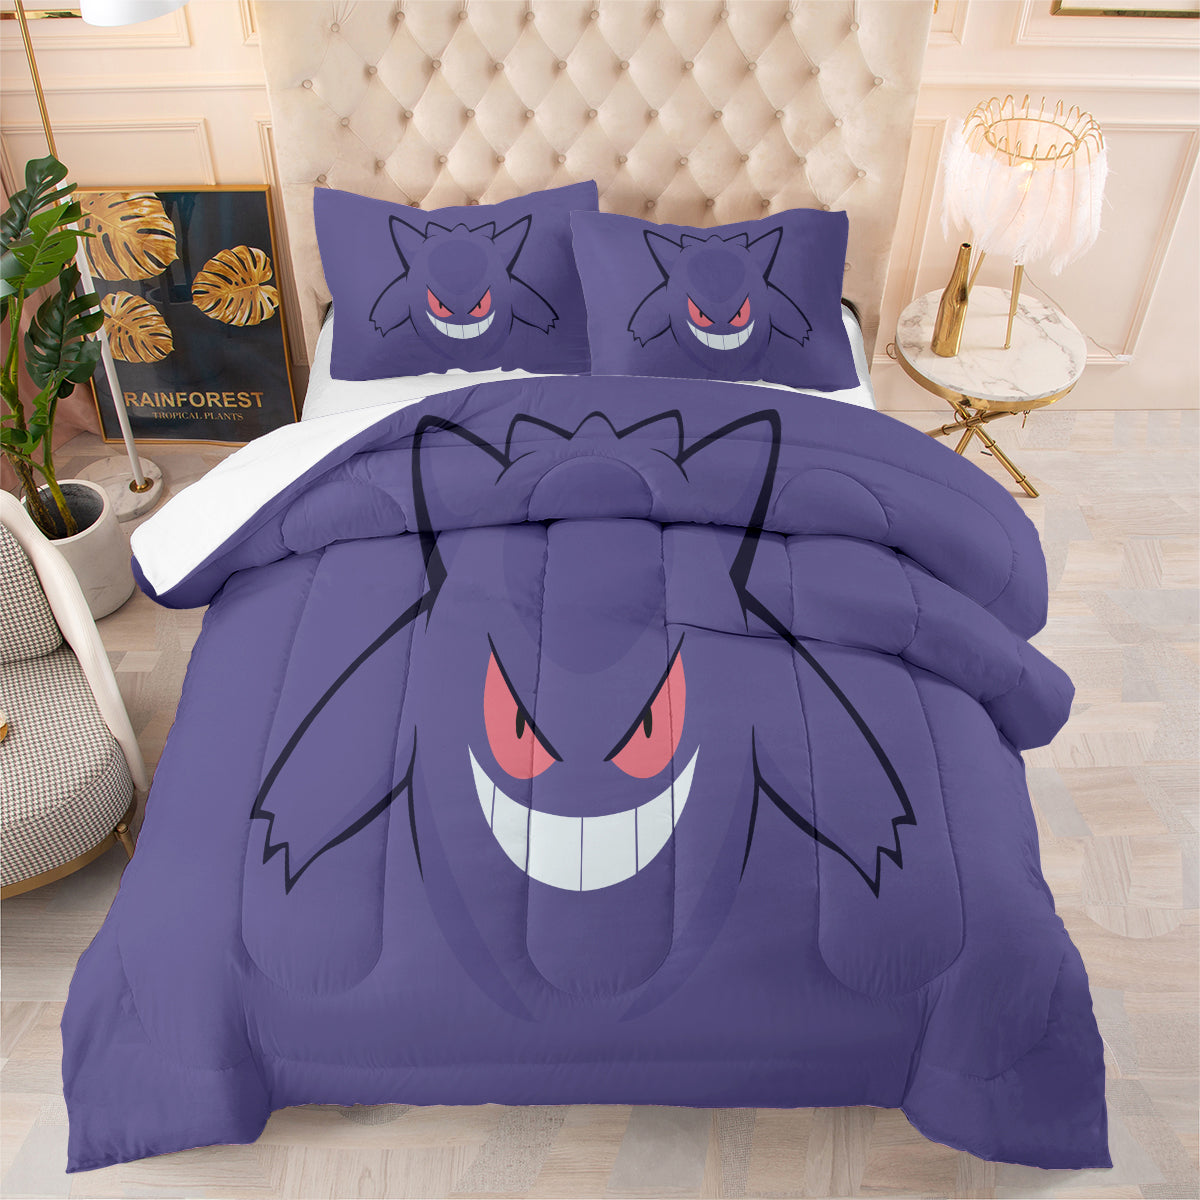 Pokemon Eevee Gengar Comforter Pillowcase Sets Blanket All Season Reversible Quilted Duvet